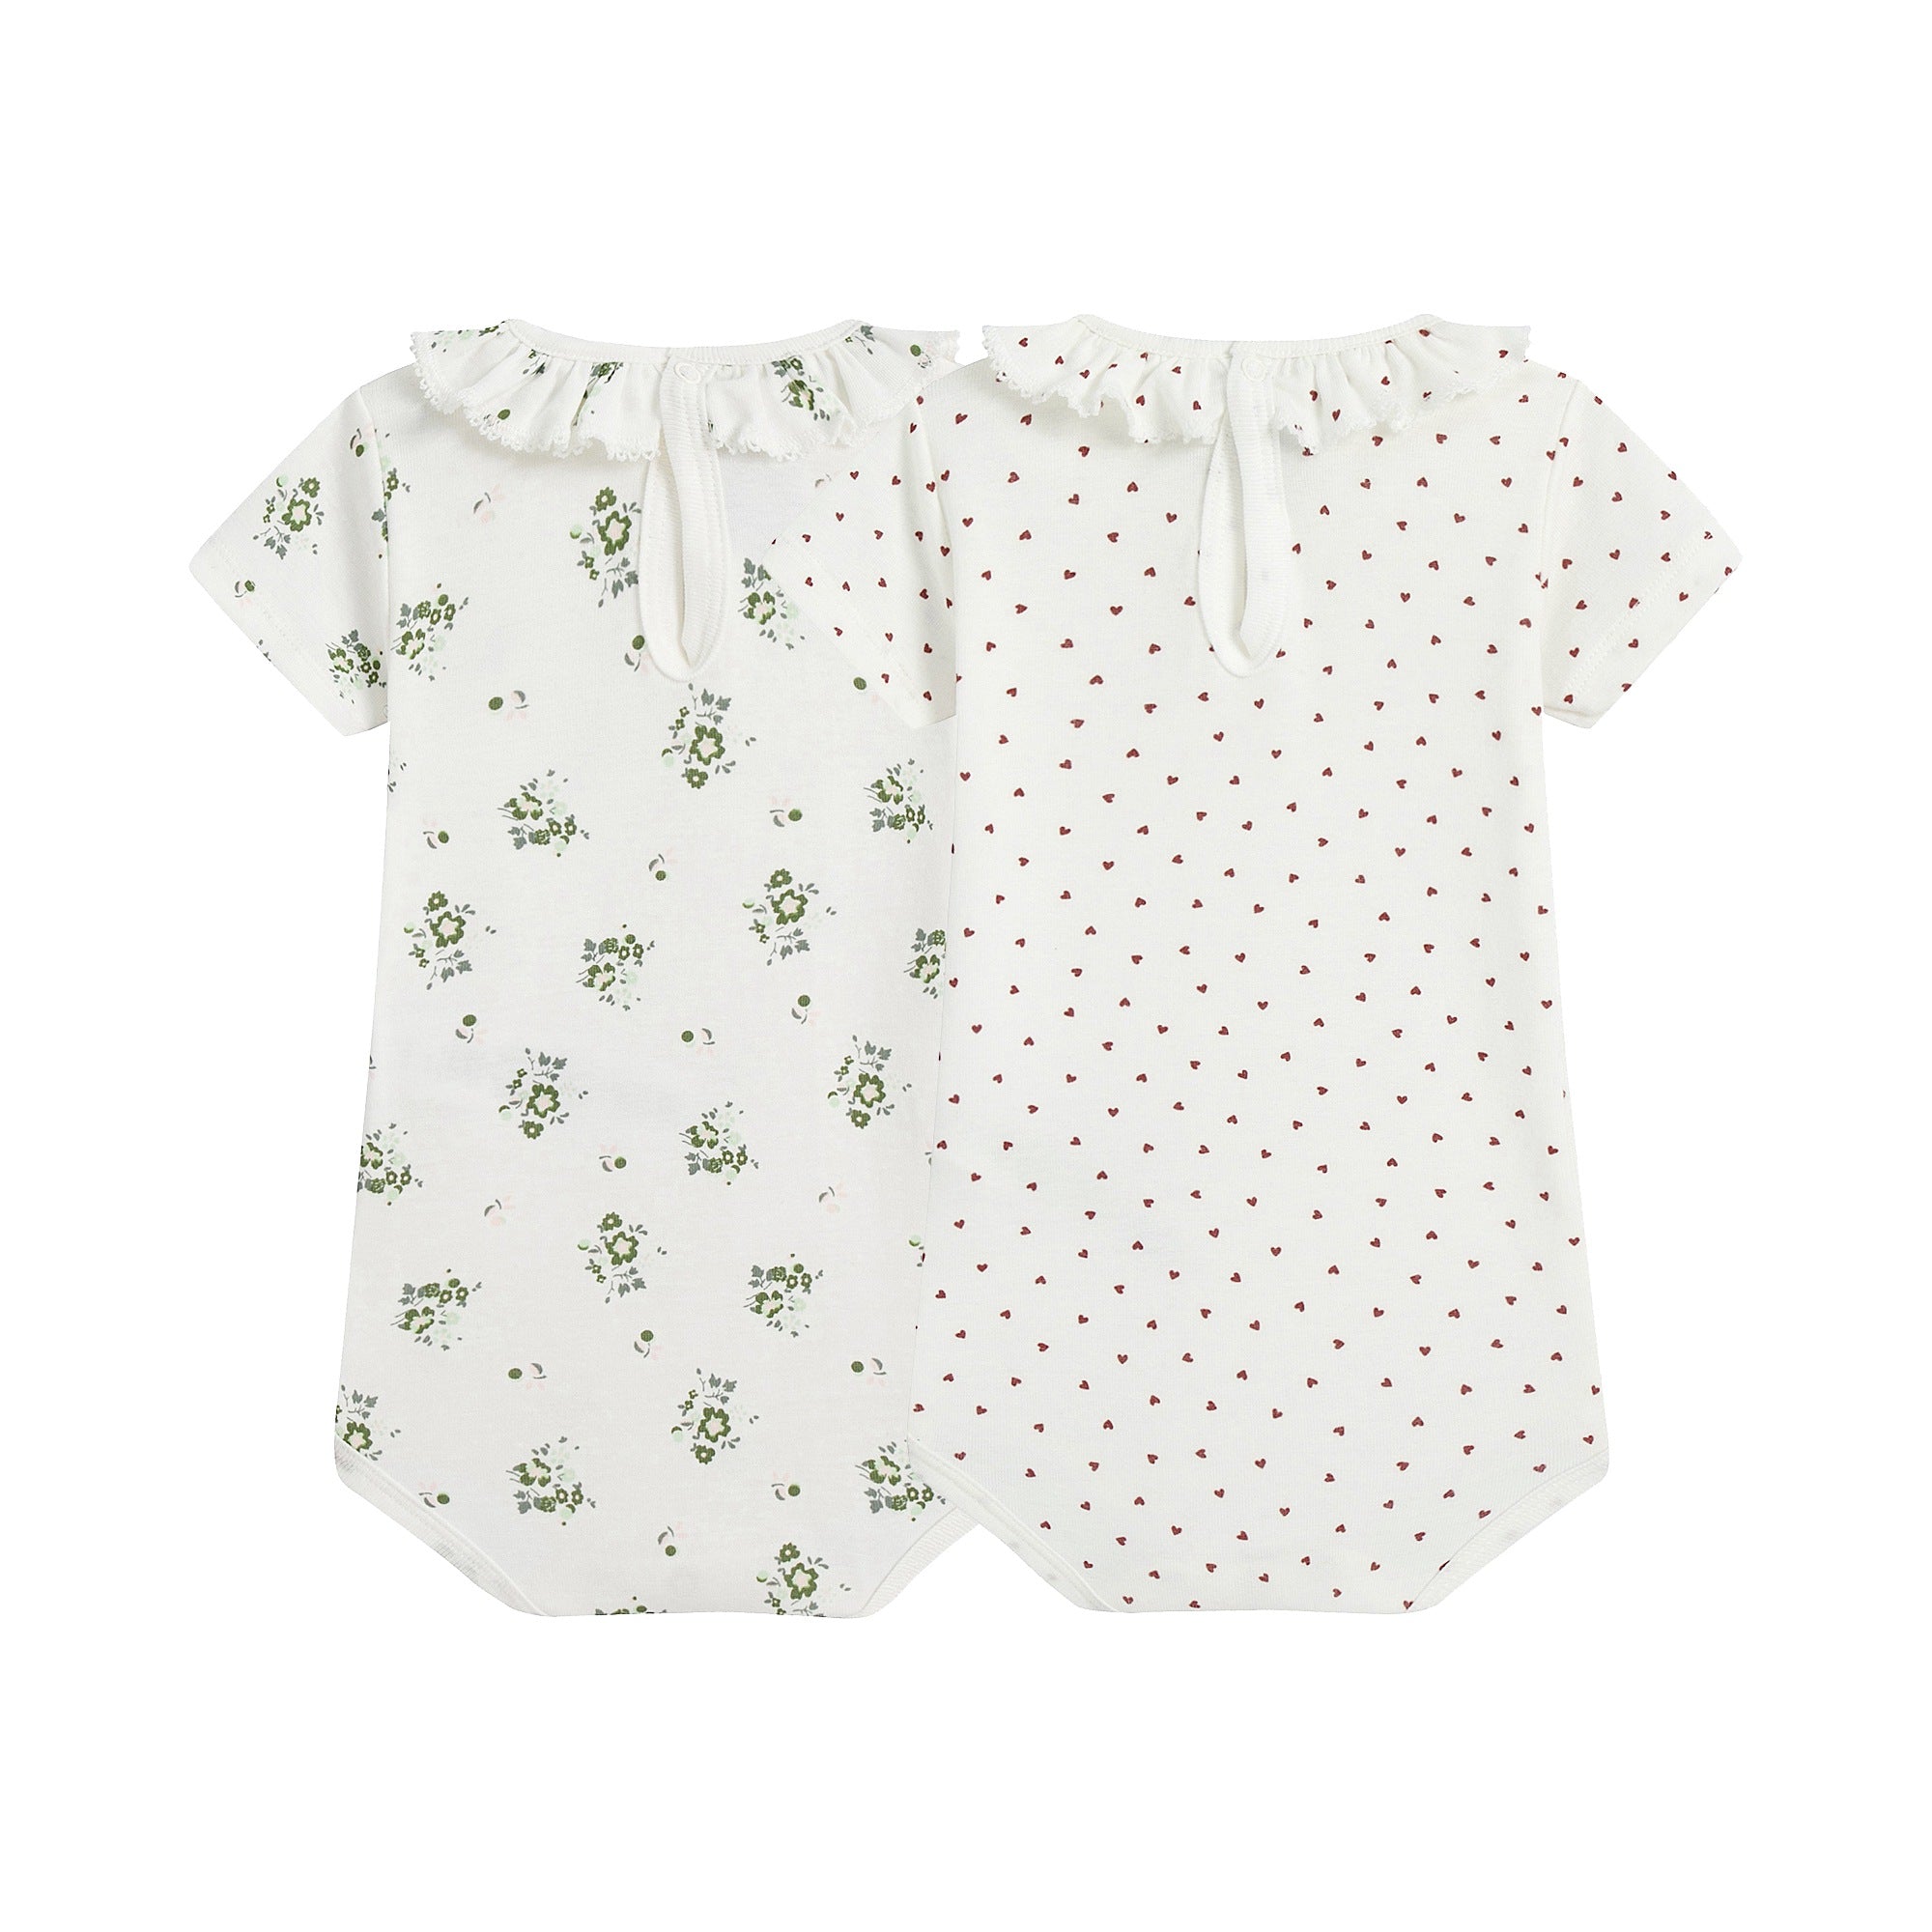 Baby Girls White Cotton Babysuit Set (2 Pack)